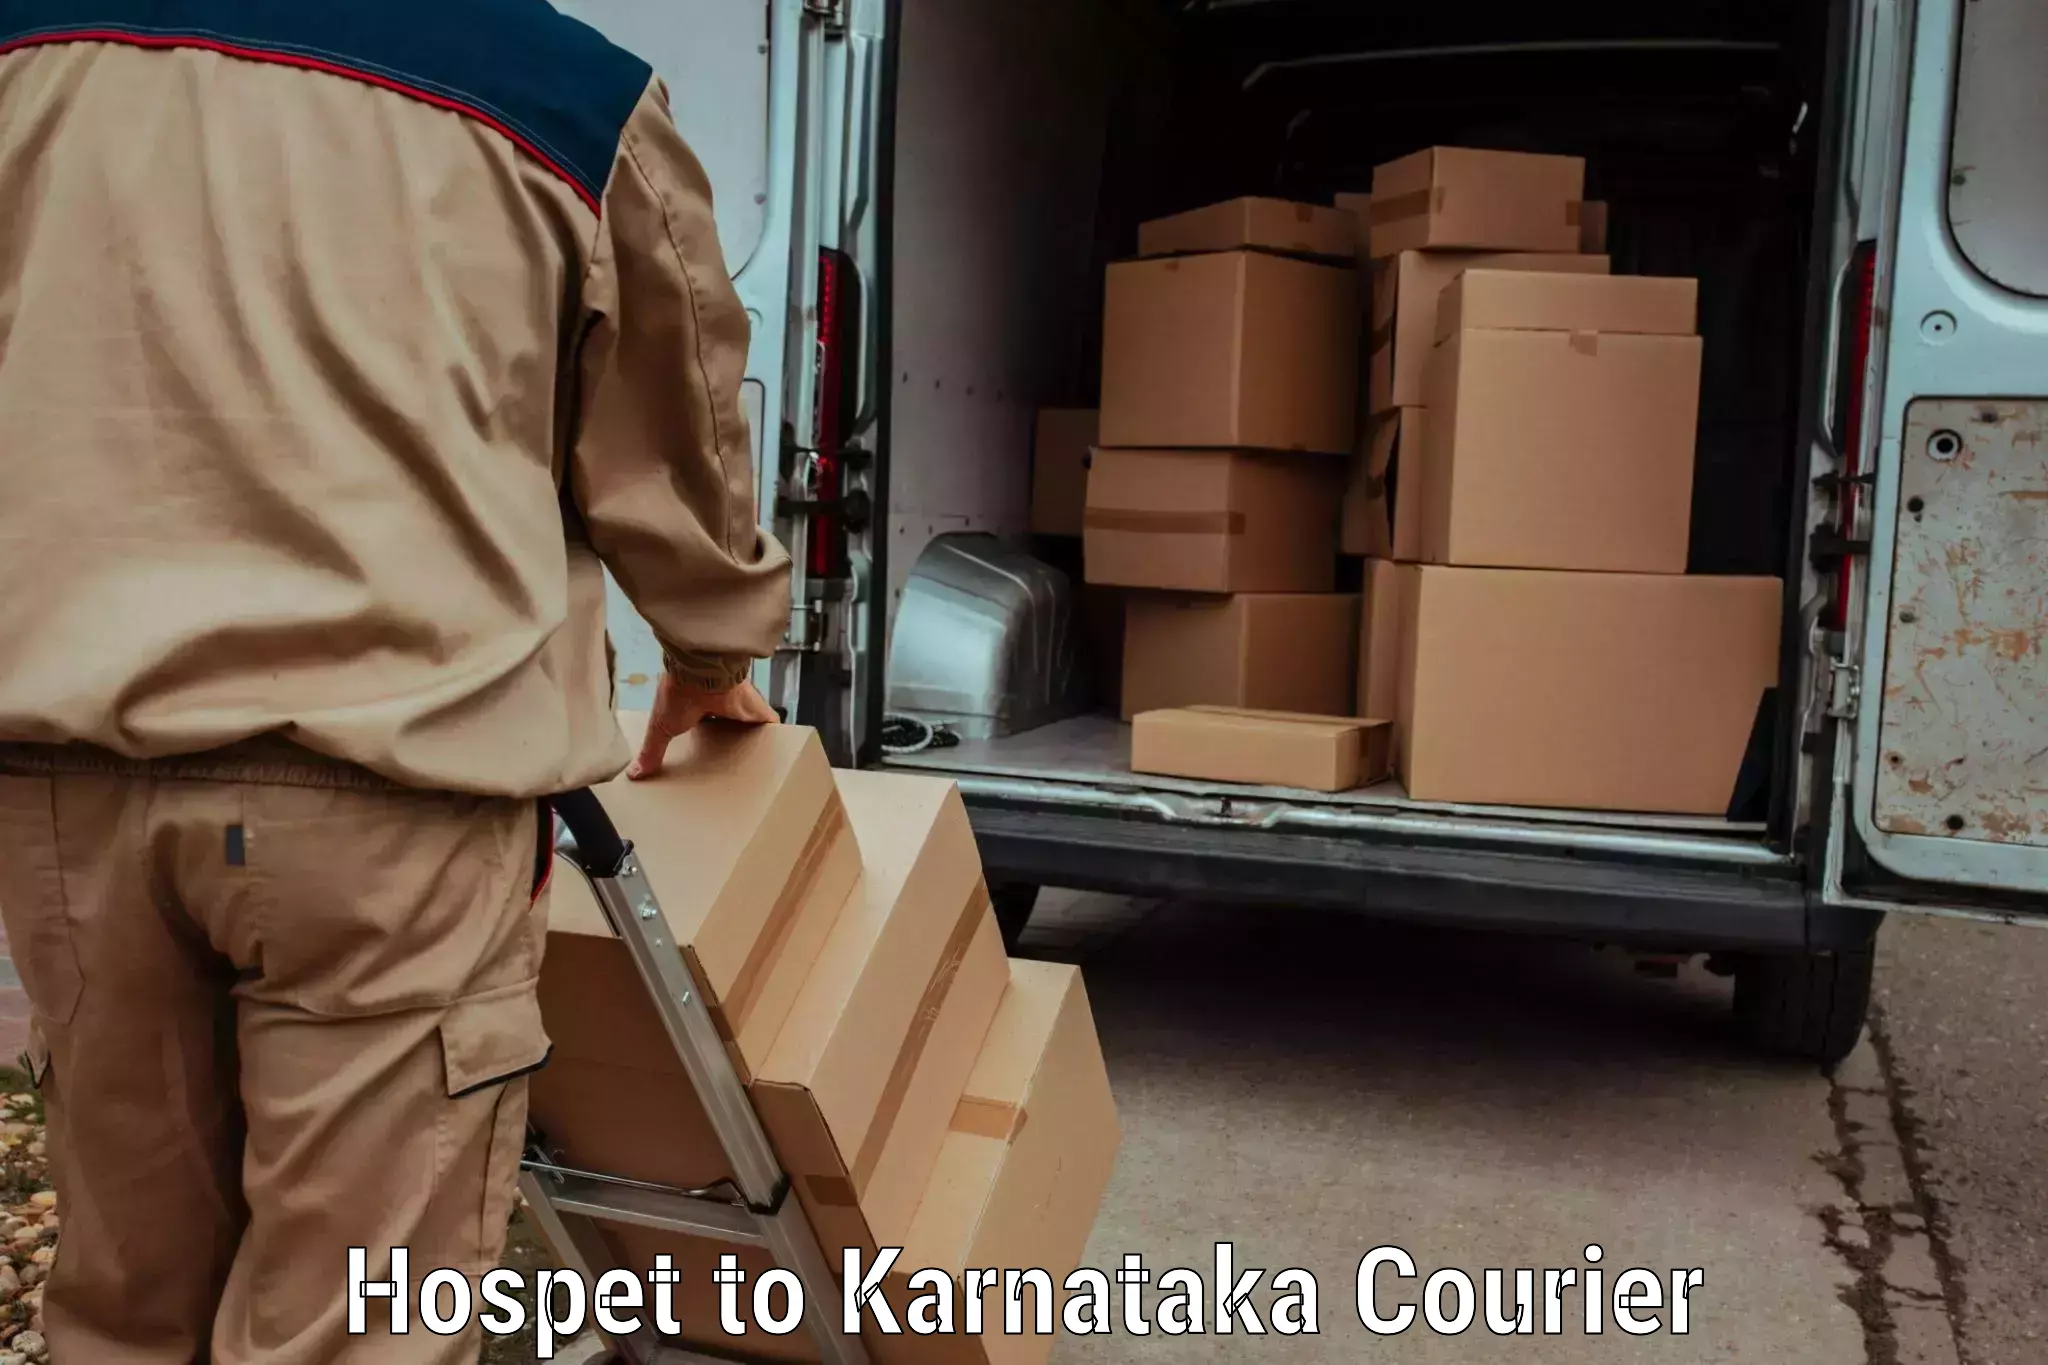 Full-service courier options Hospet to Kanjarakatte